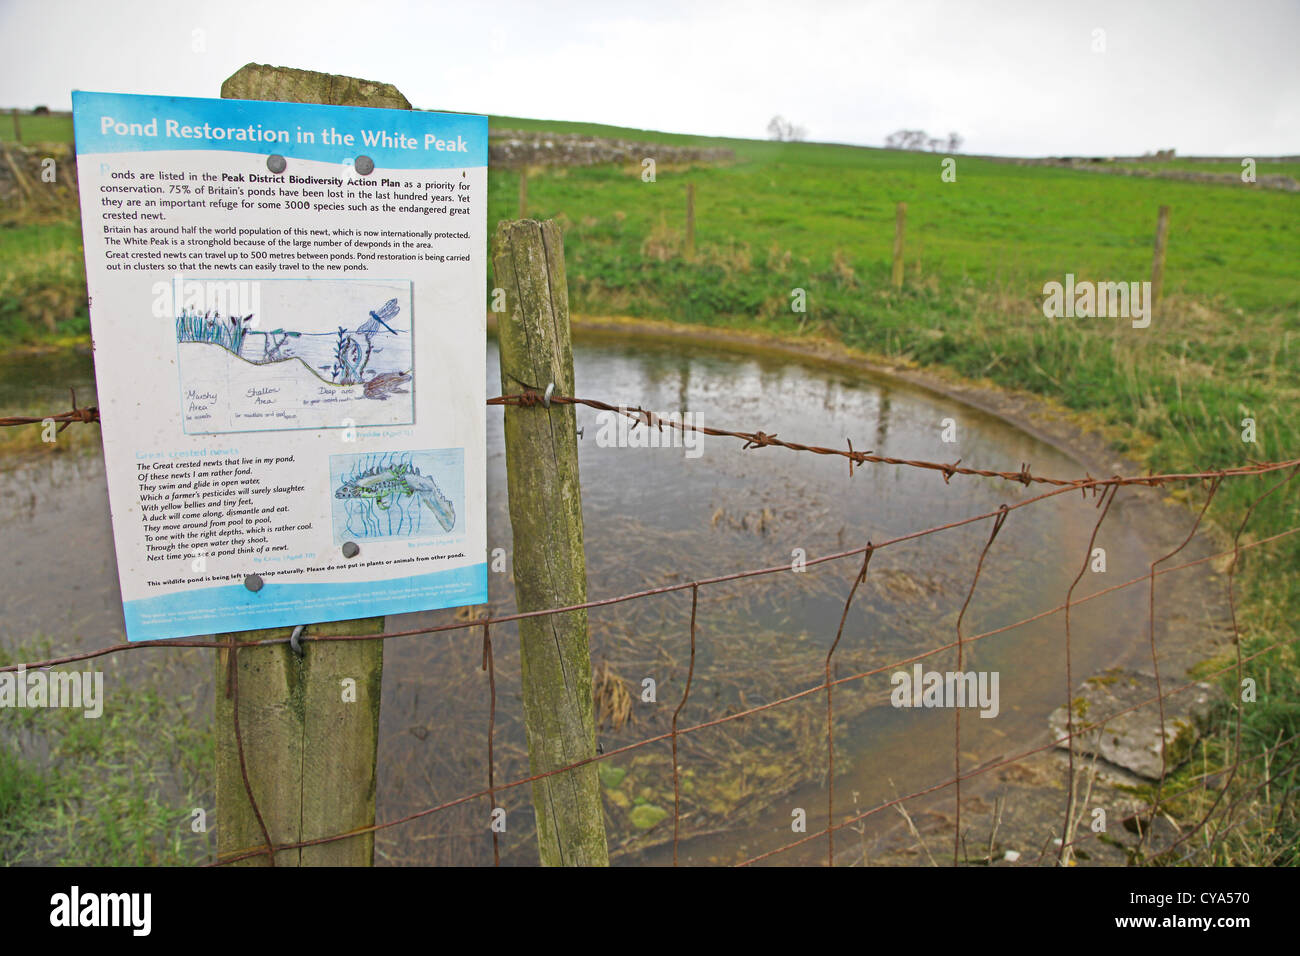 A dew pond restoration scheme in the White Peak area of the Peak District National Park near Monsal Dale Derbyshire England UK Stock Photo